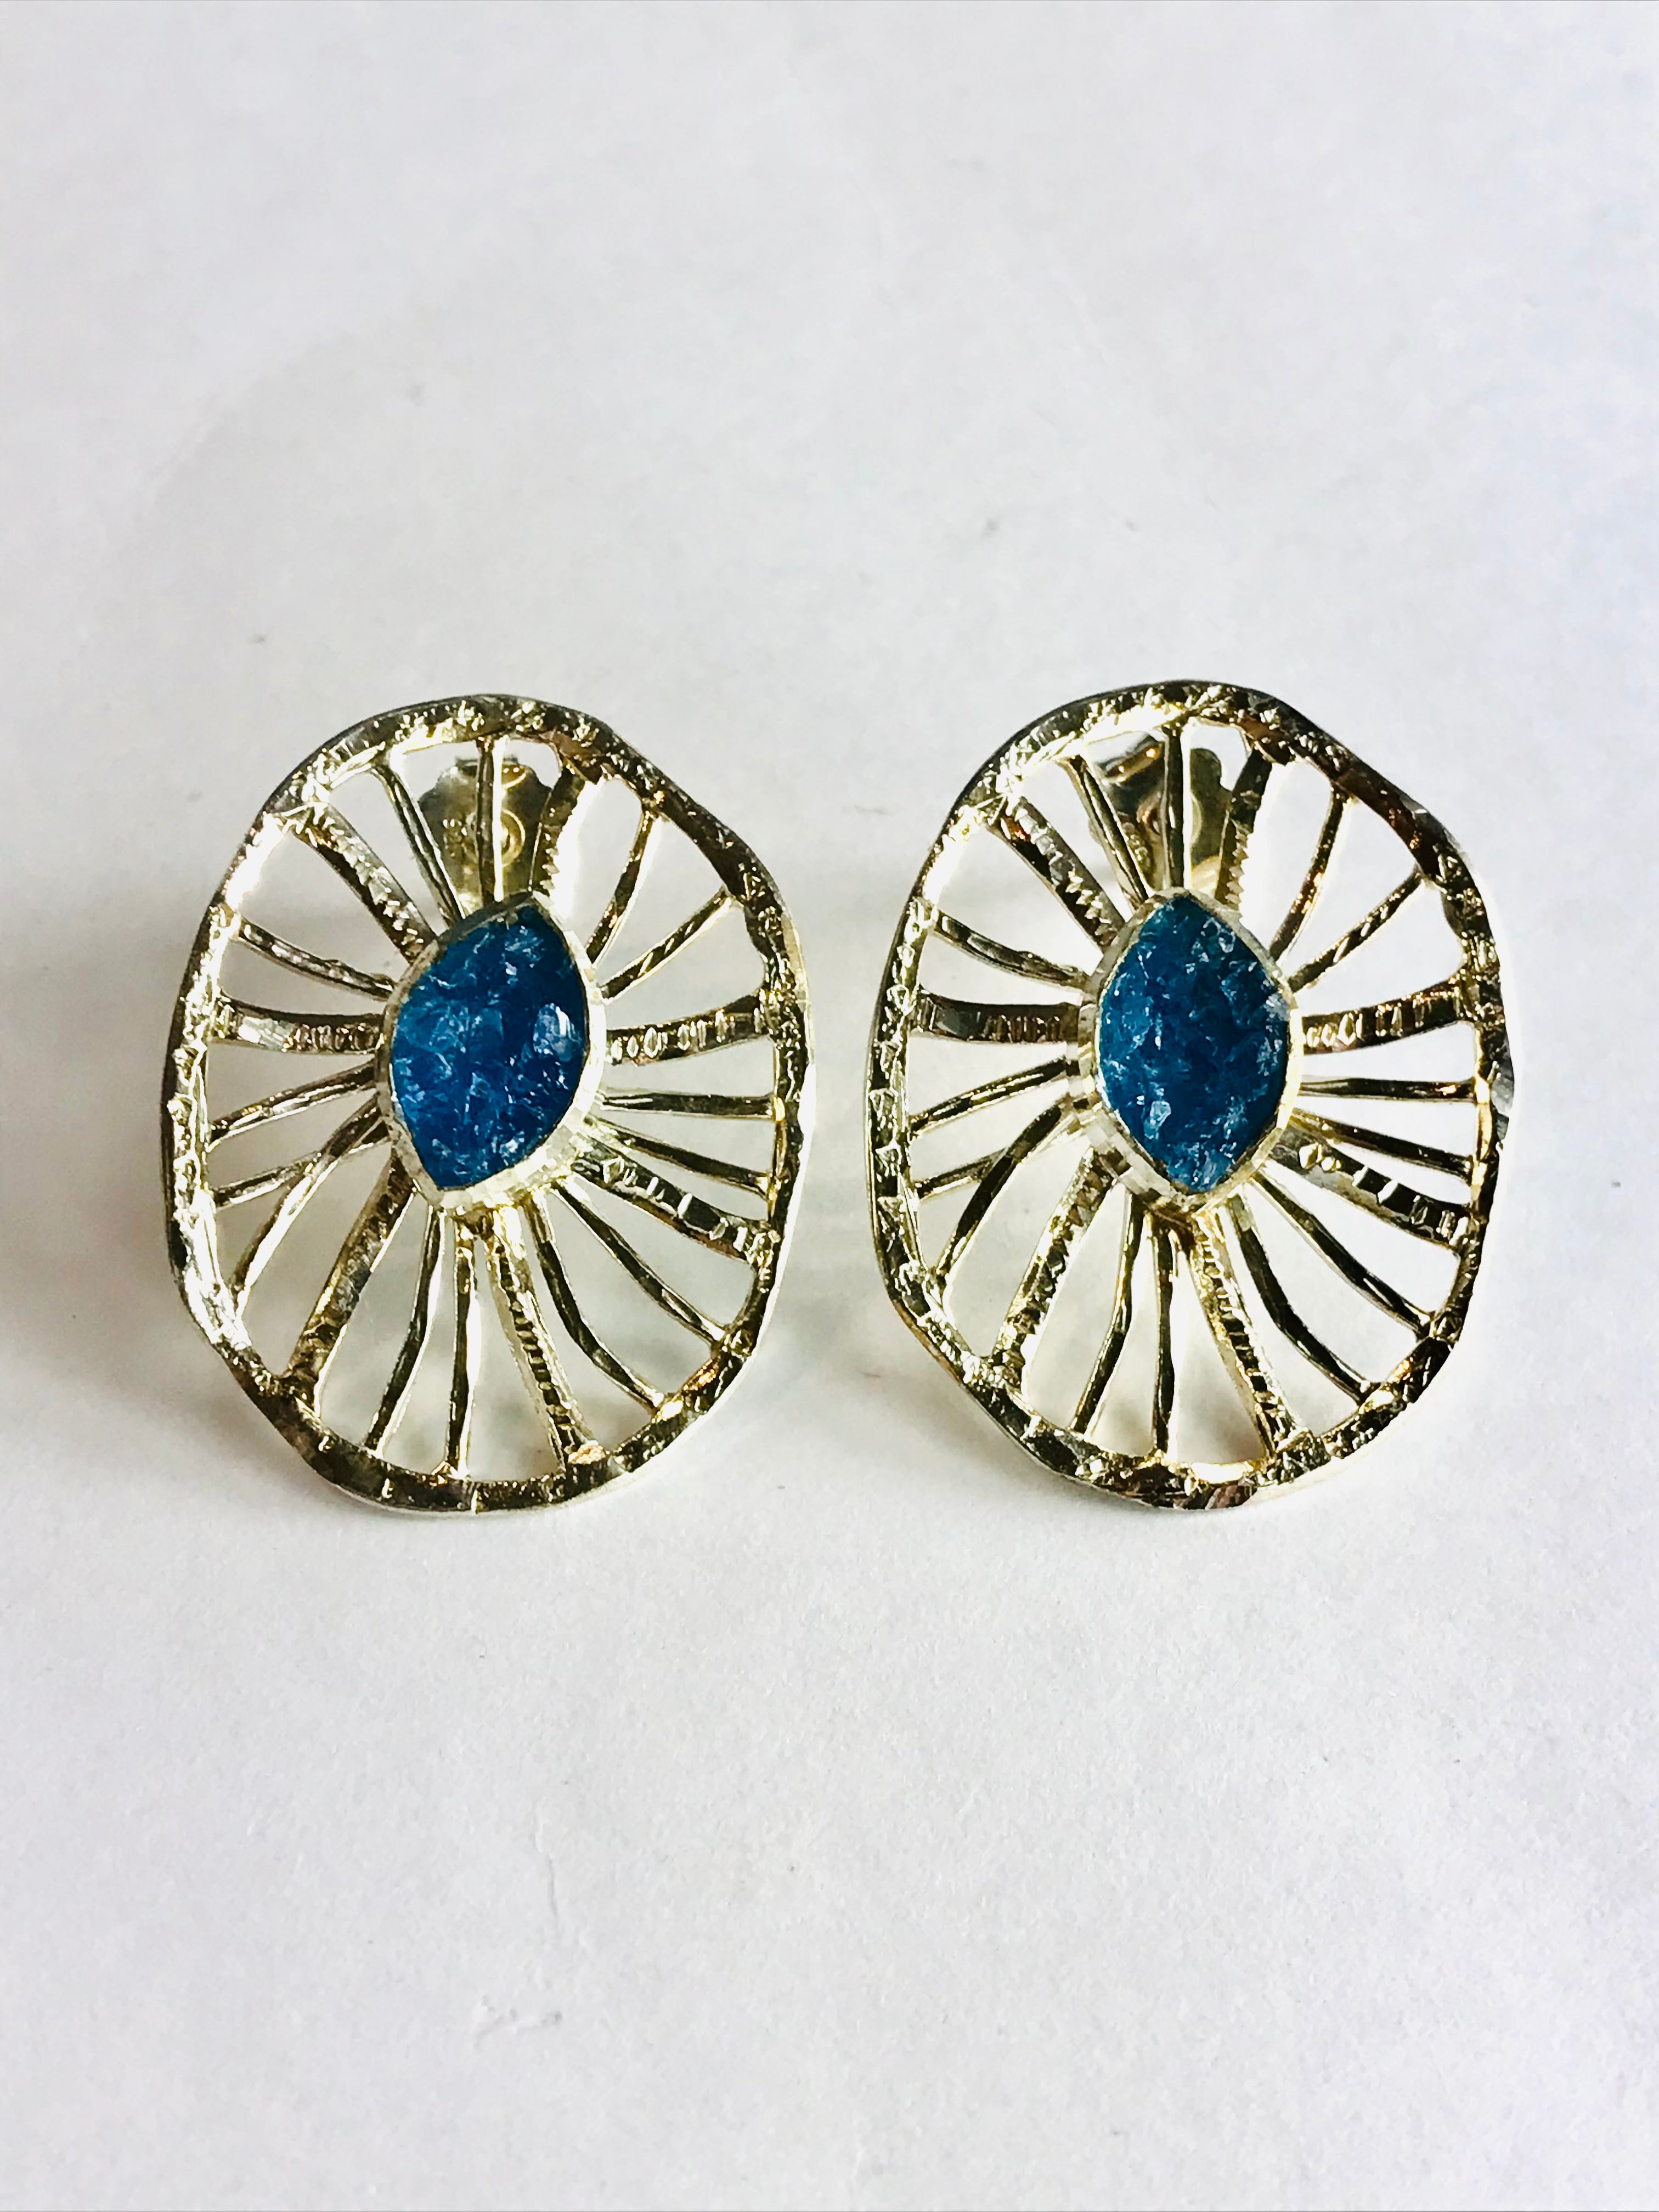 Silver Filigree Earrings - The Nancy Smillie Shop - Art, Jewellery & Designer Gifts Glasgow